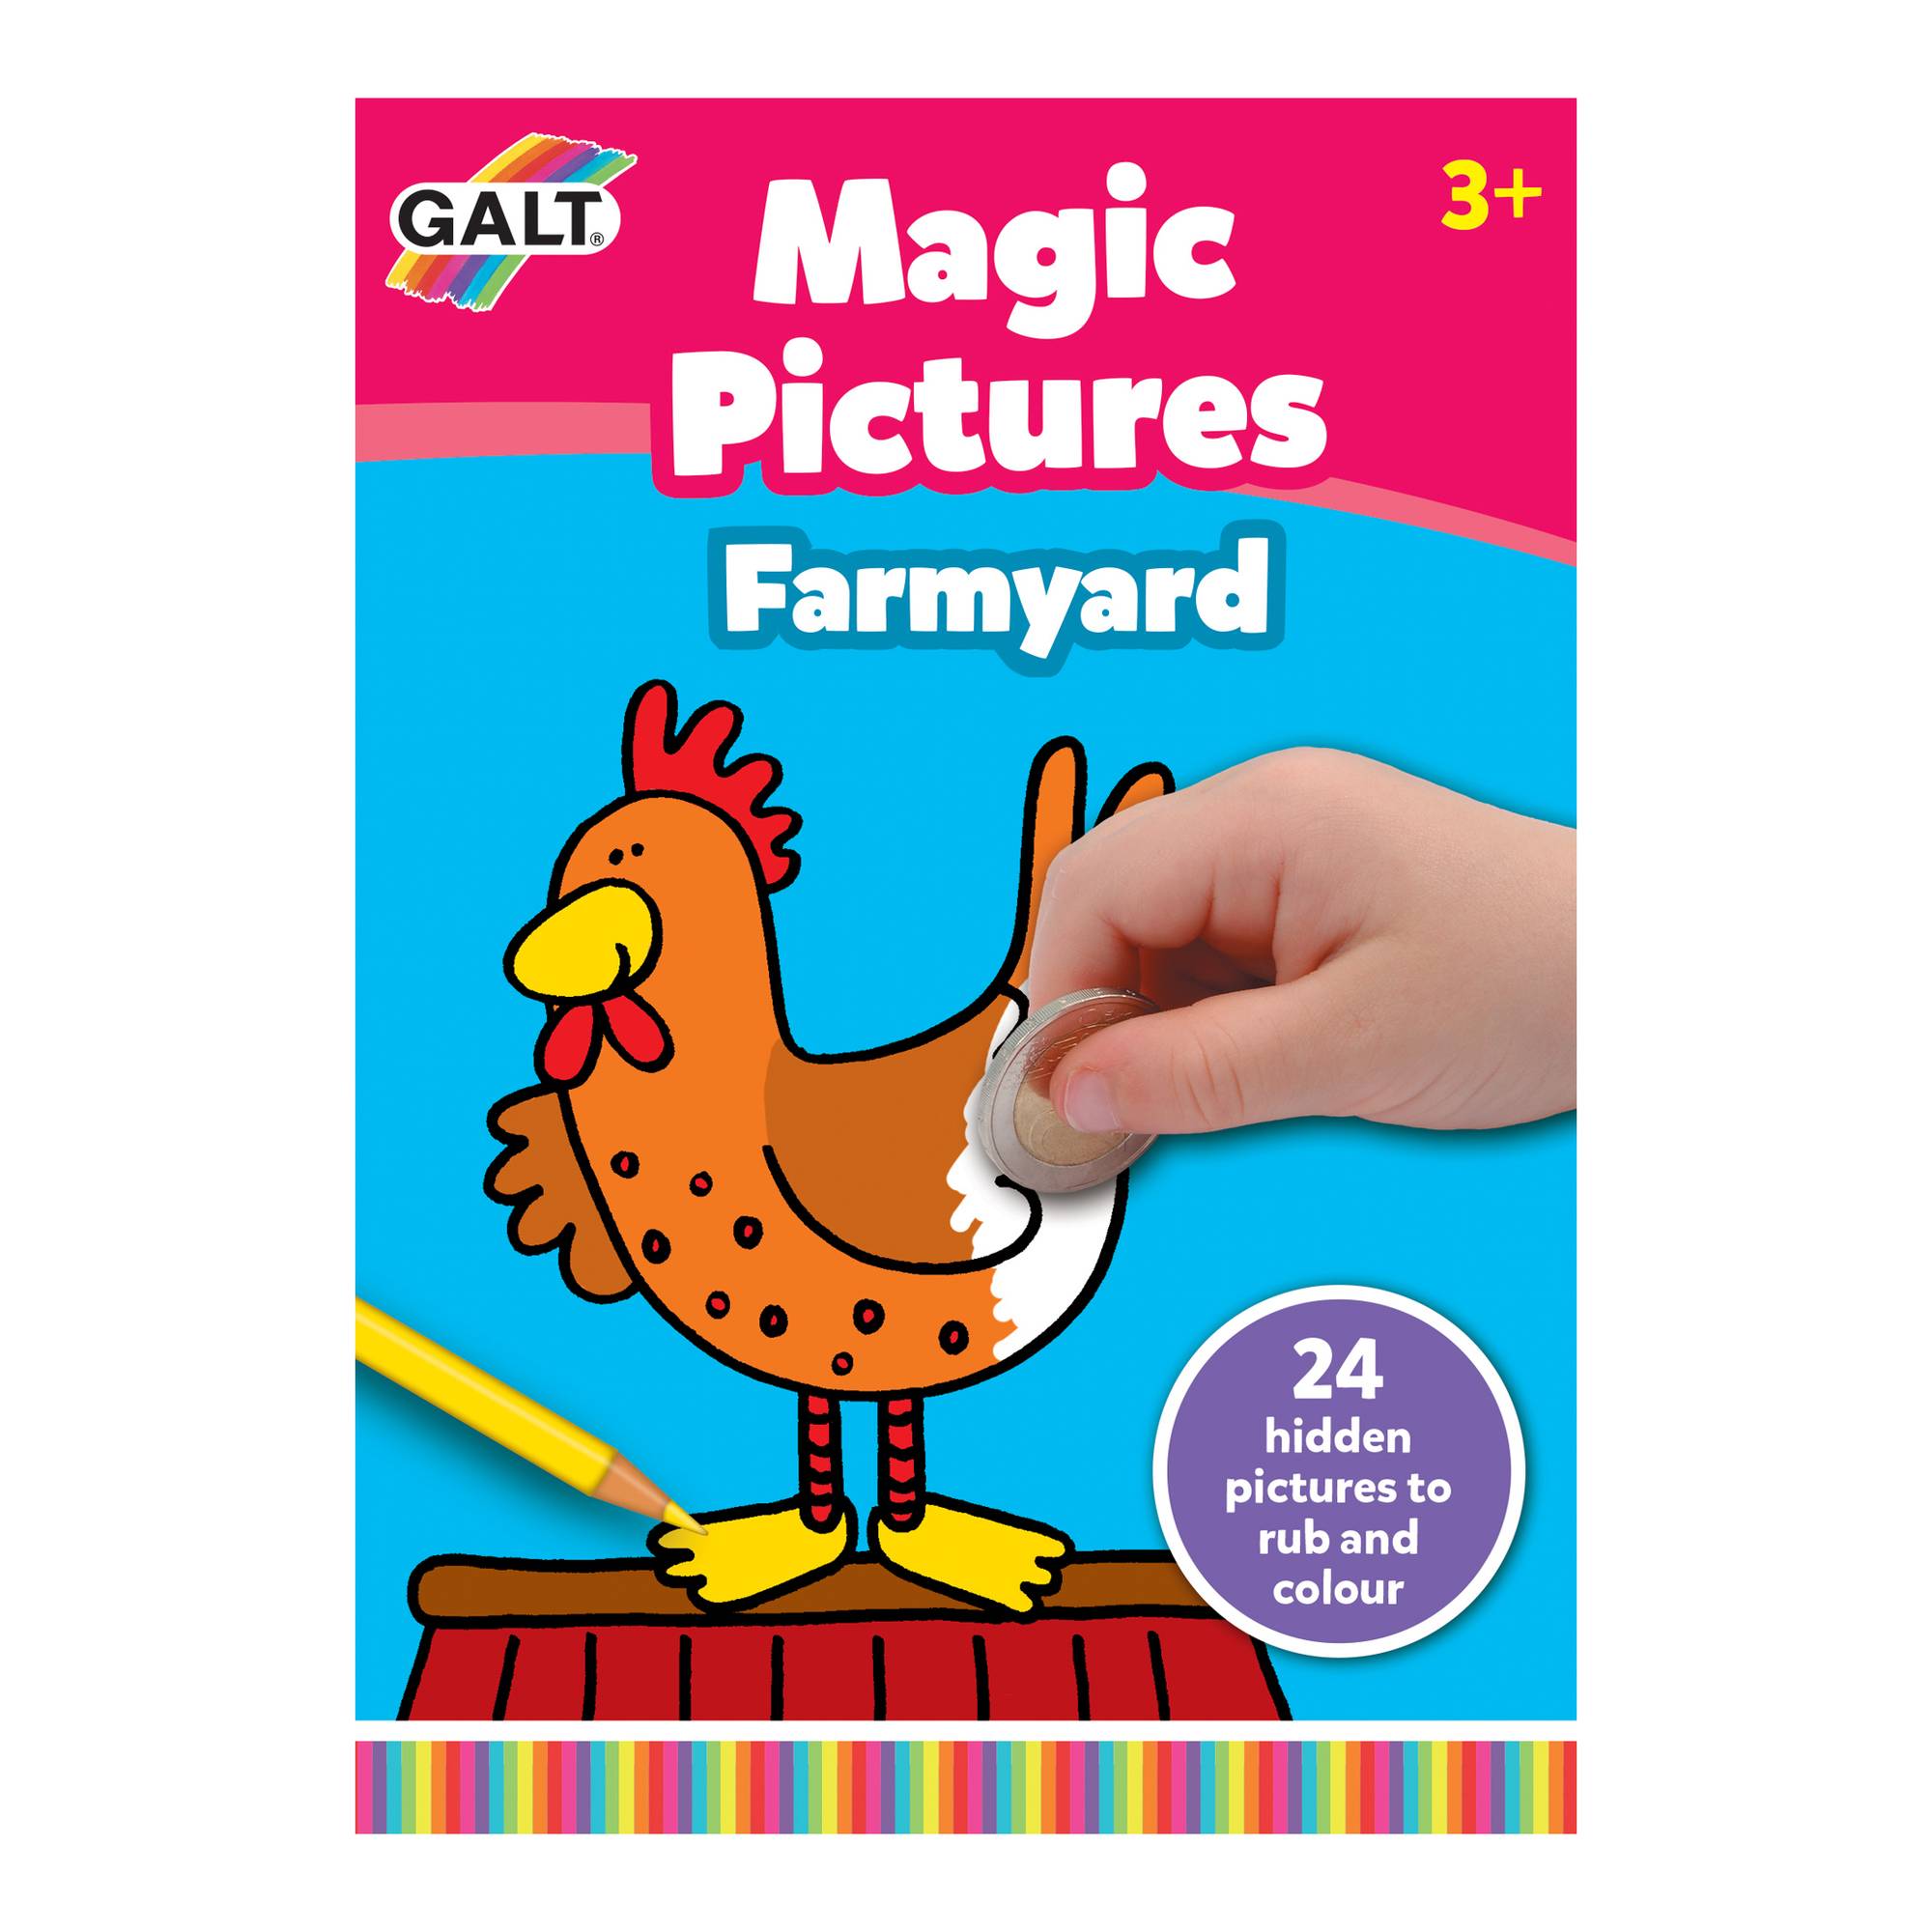 Galt Farmyard Magic Pictures